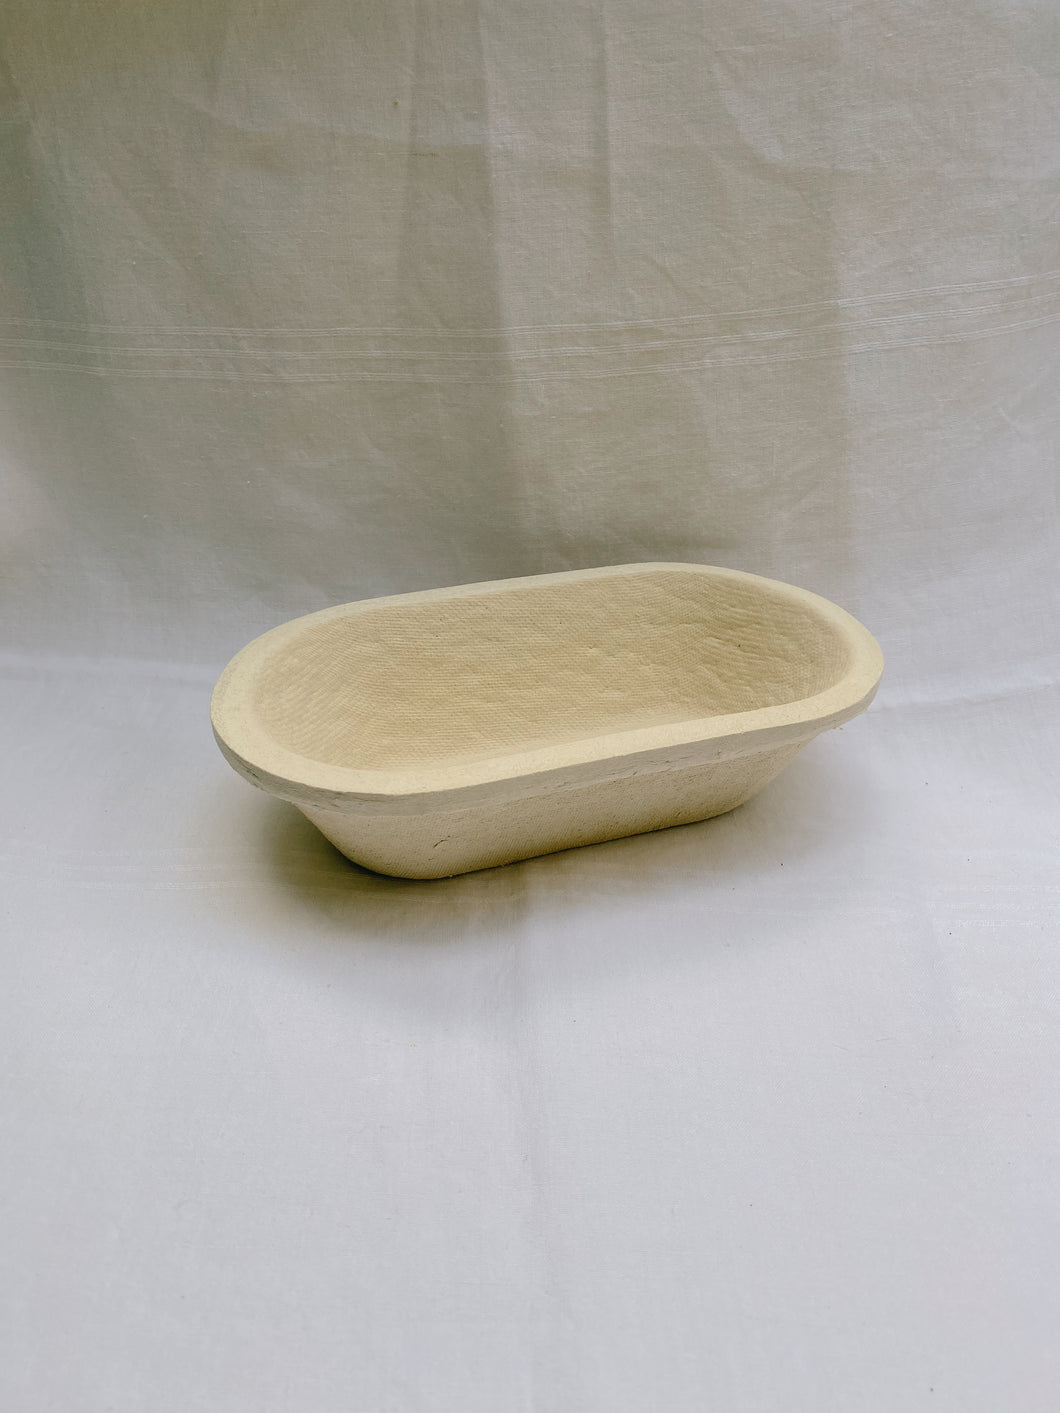 Long Plain Oval Proving Banneton Basket 1000g - Upper Internal Dimensions 29.5cm x 14cm x 7cm (compressed wood pulp)